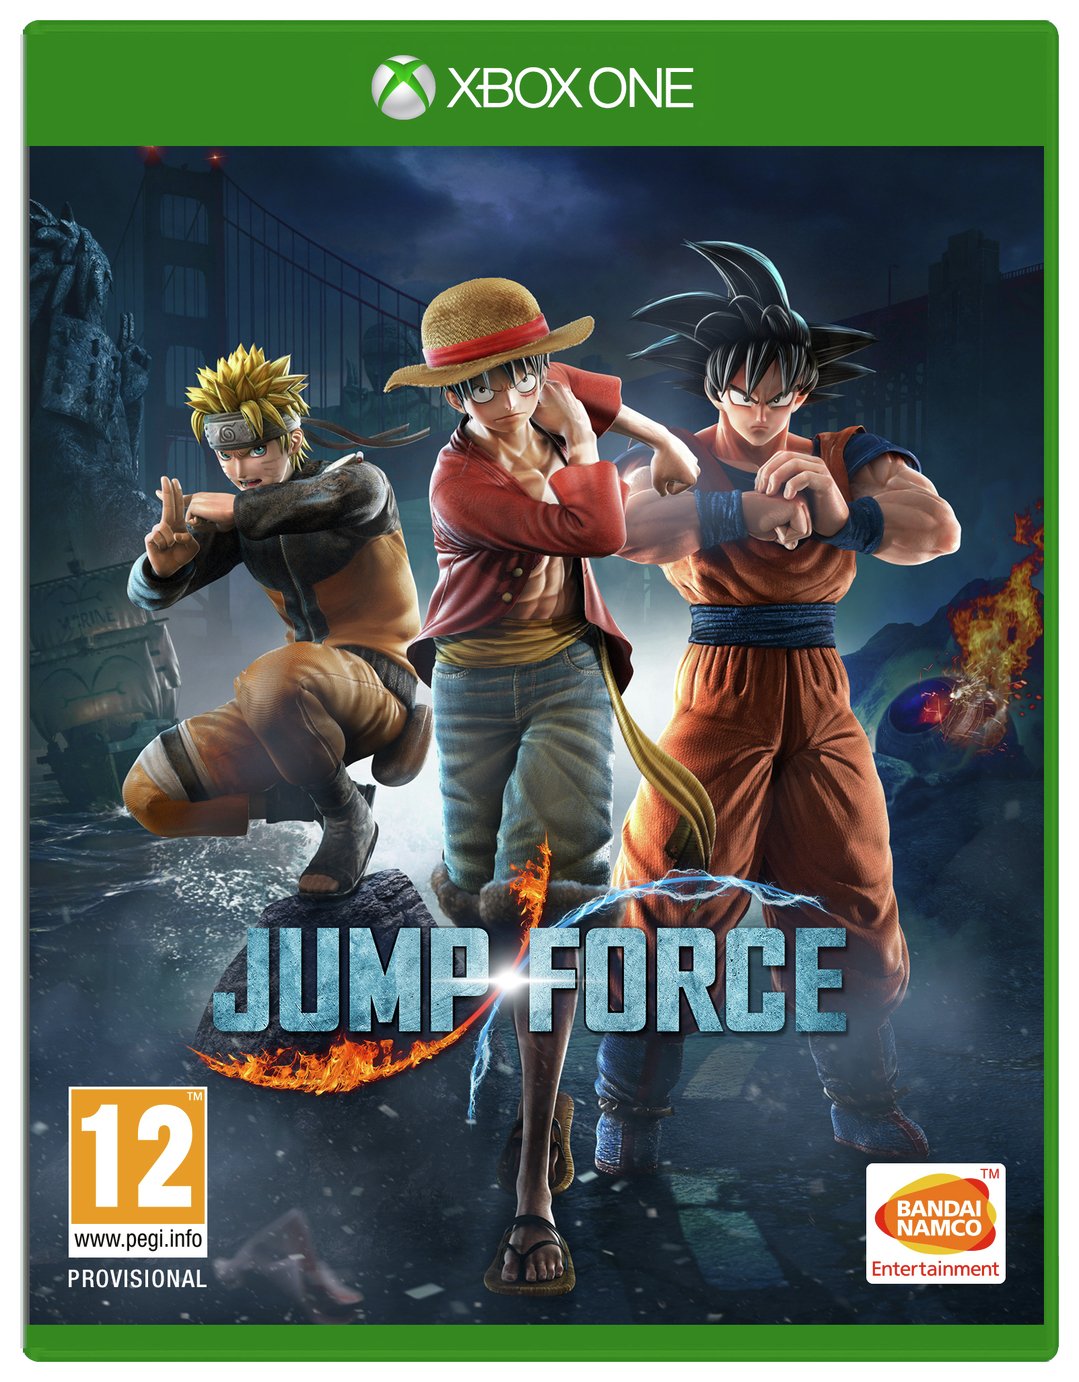 Jump Force Xbox One Game